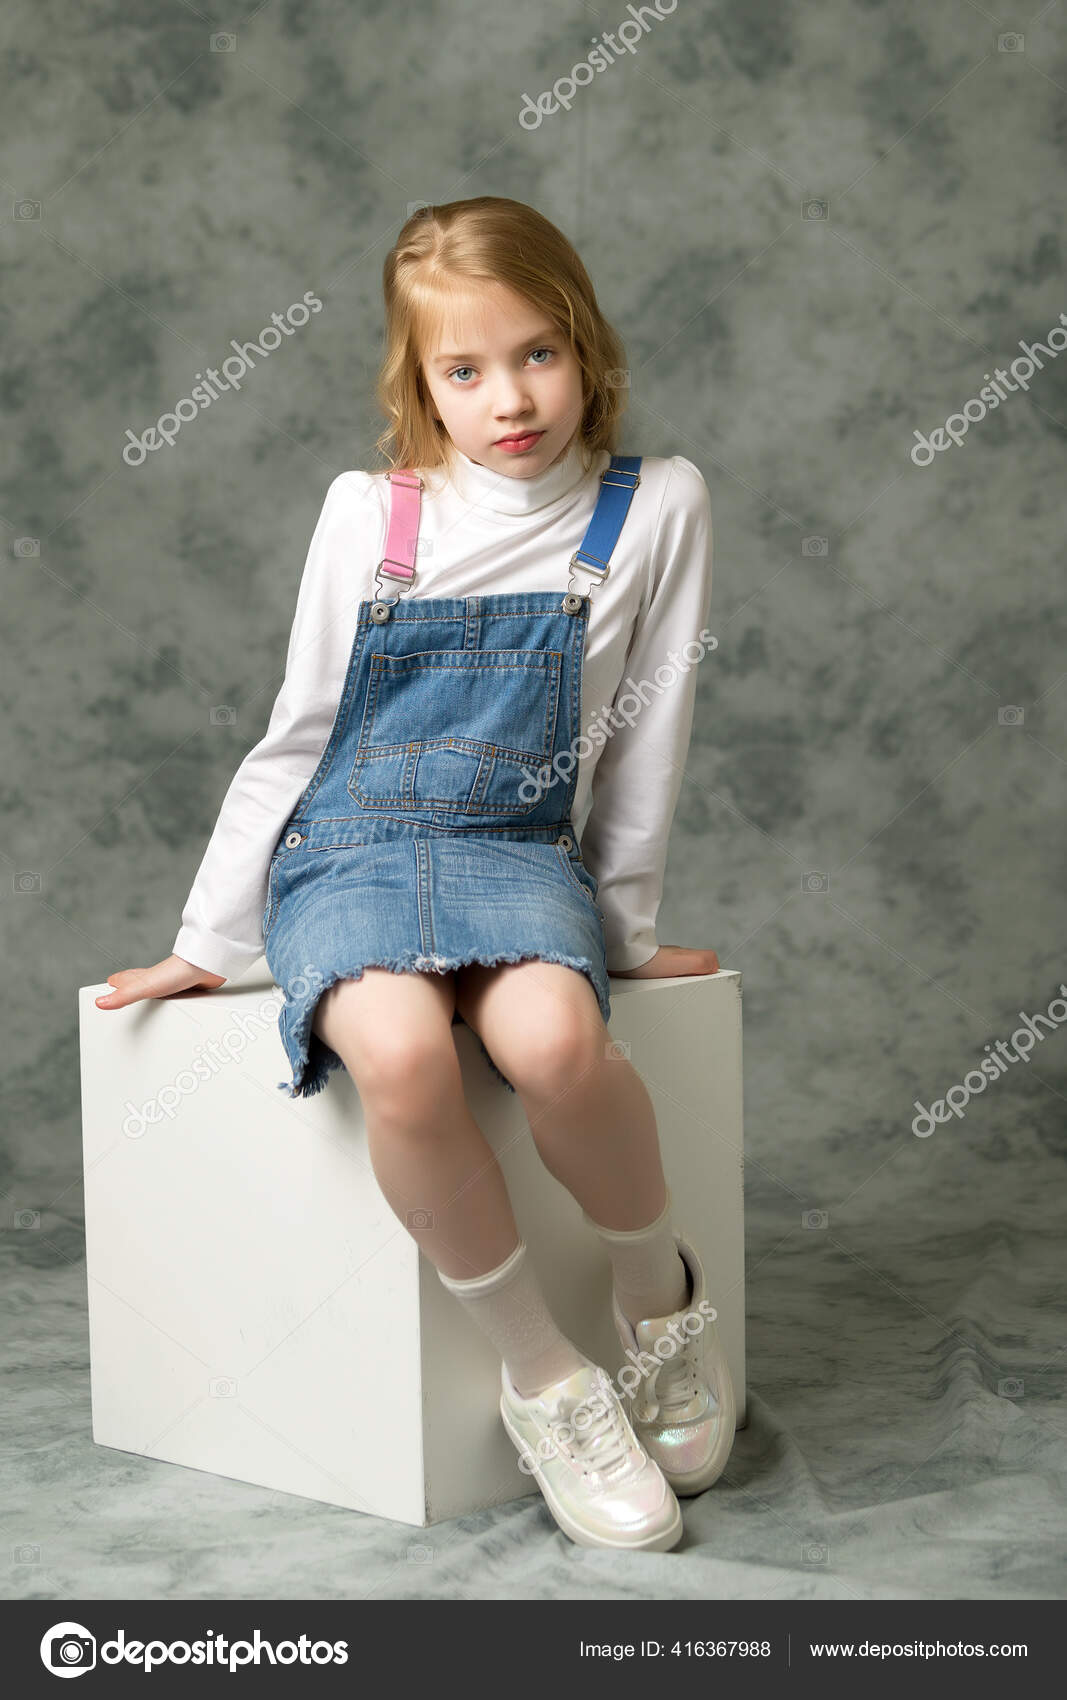 https://st4.depositphotos.com/1610634/41636/i/1600/depositphotos_416367988-stock-photo-little-girl-in-a-short.jpg